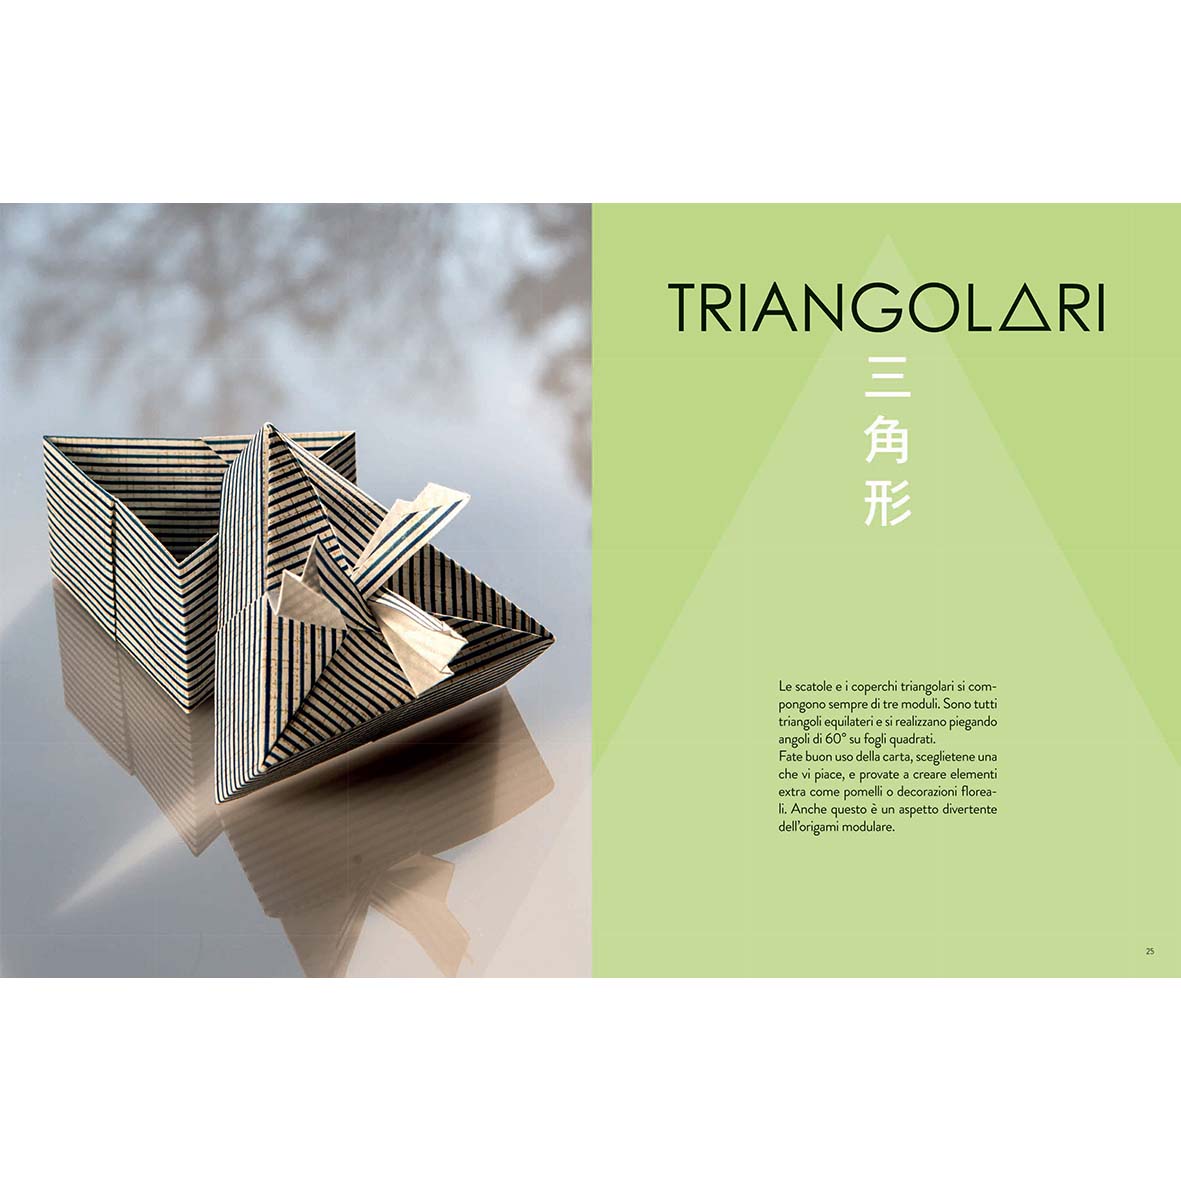 Tomoko Fuse - The art of the origami box